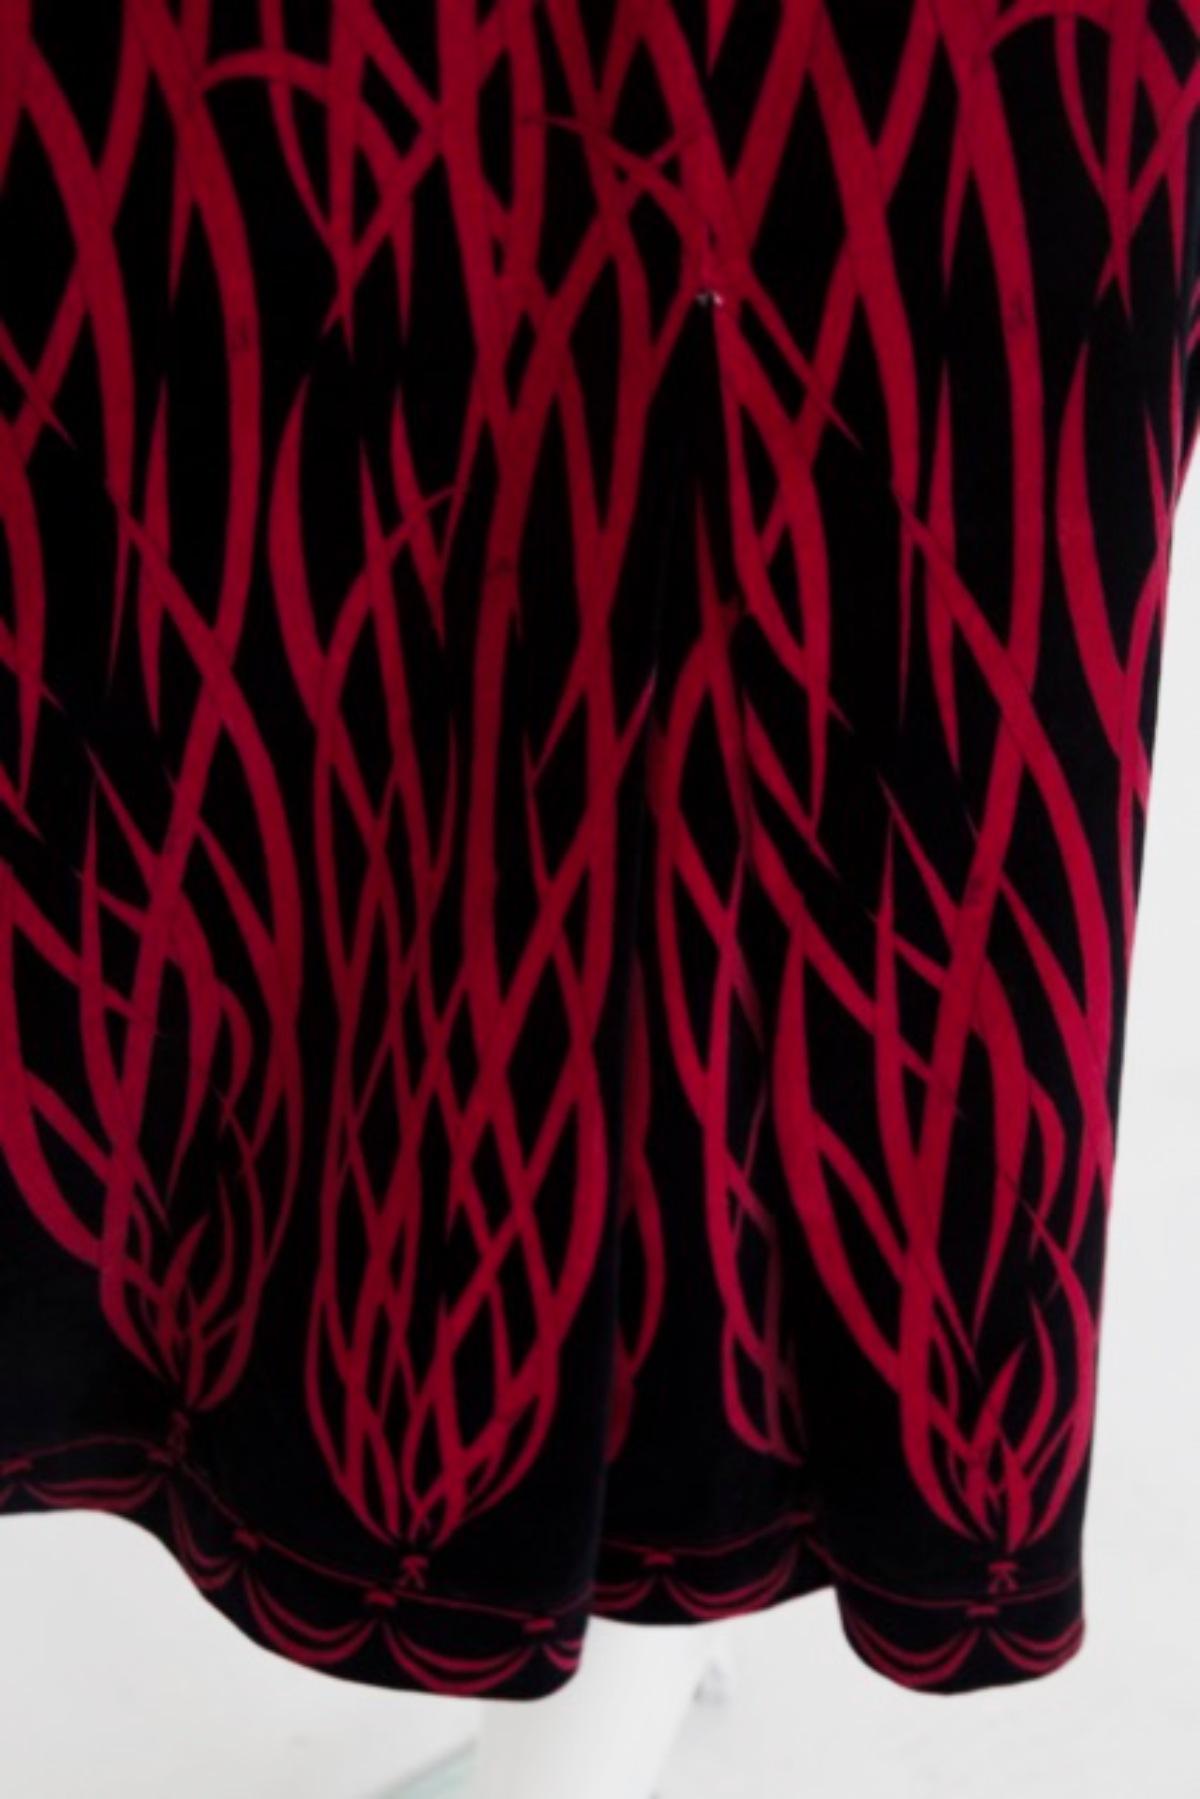 Emilio Pucci Psychedelic Velvet Two Pieces Suit For Sale 3